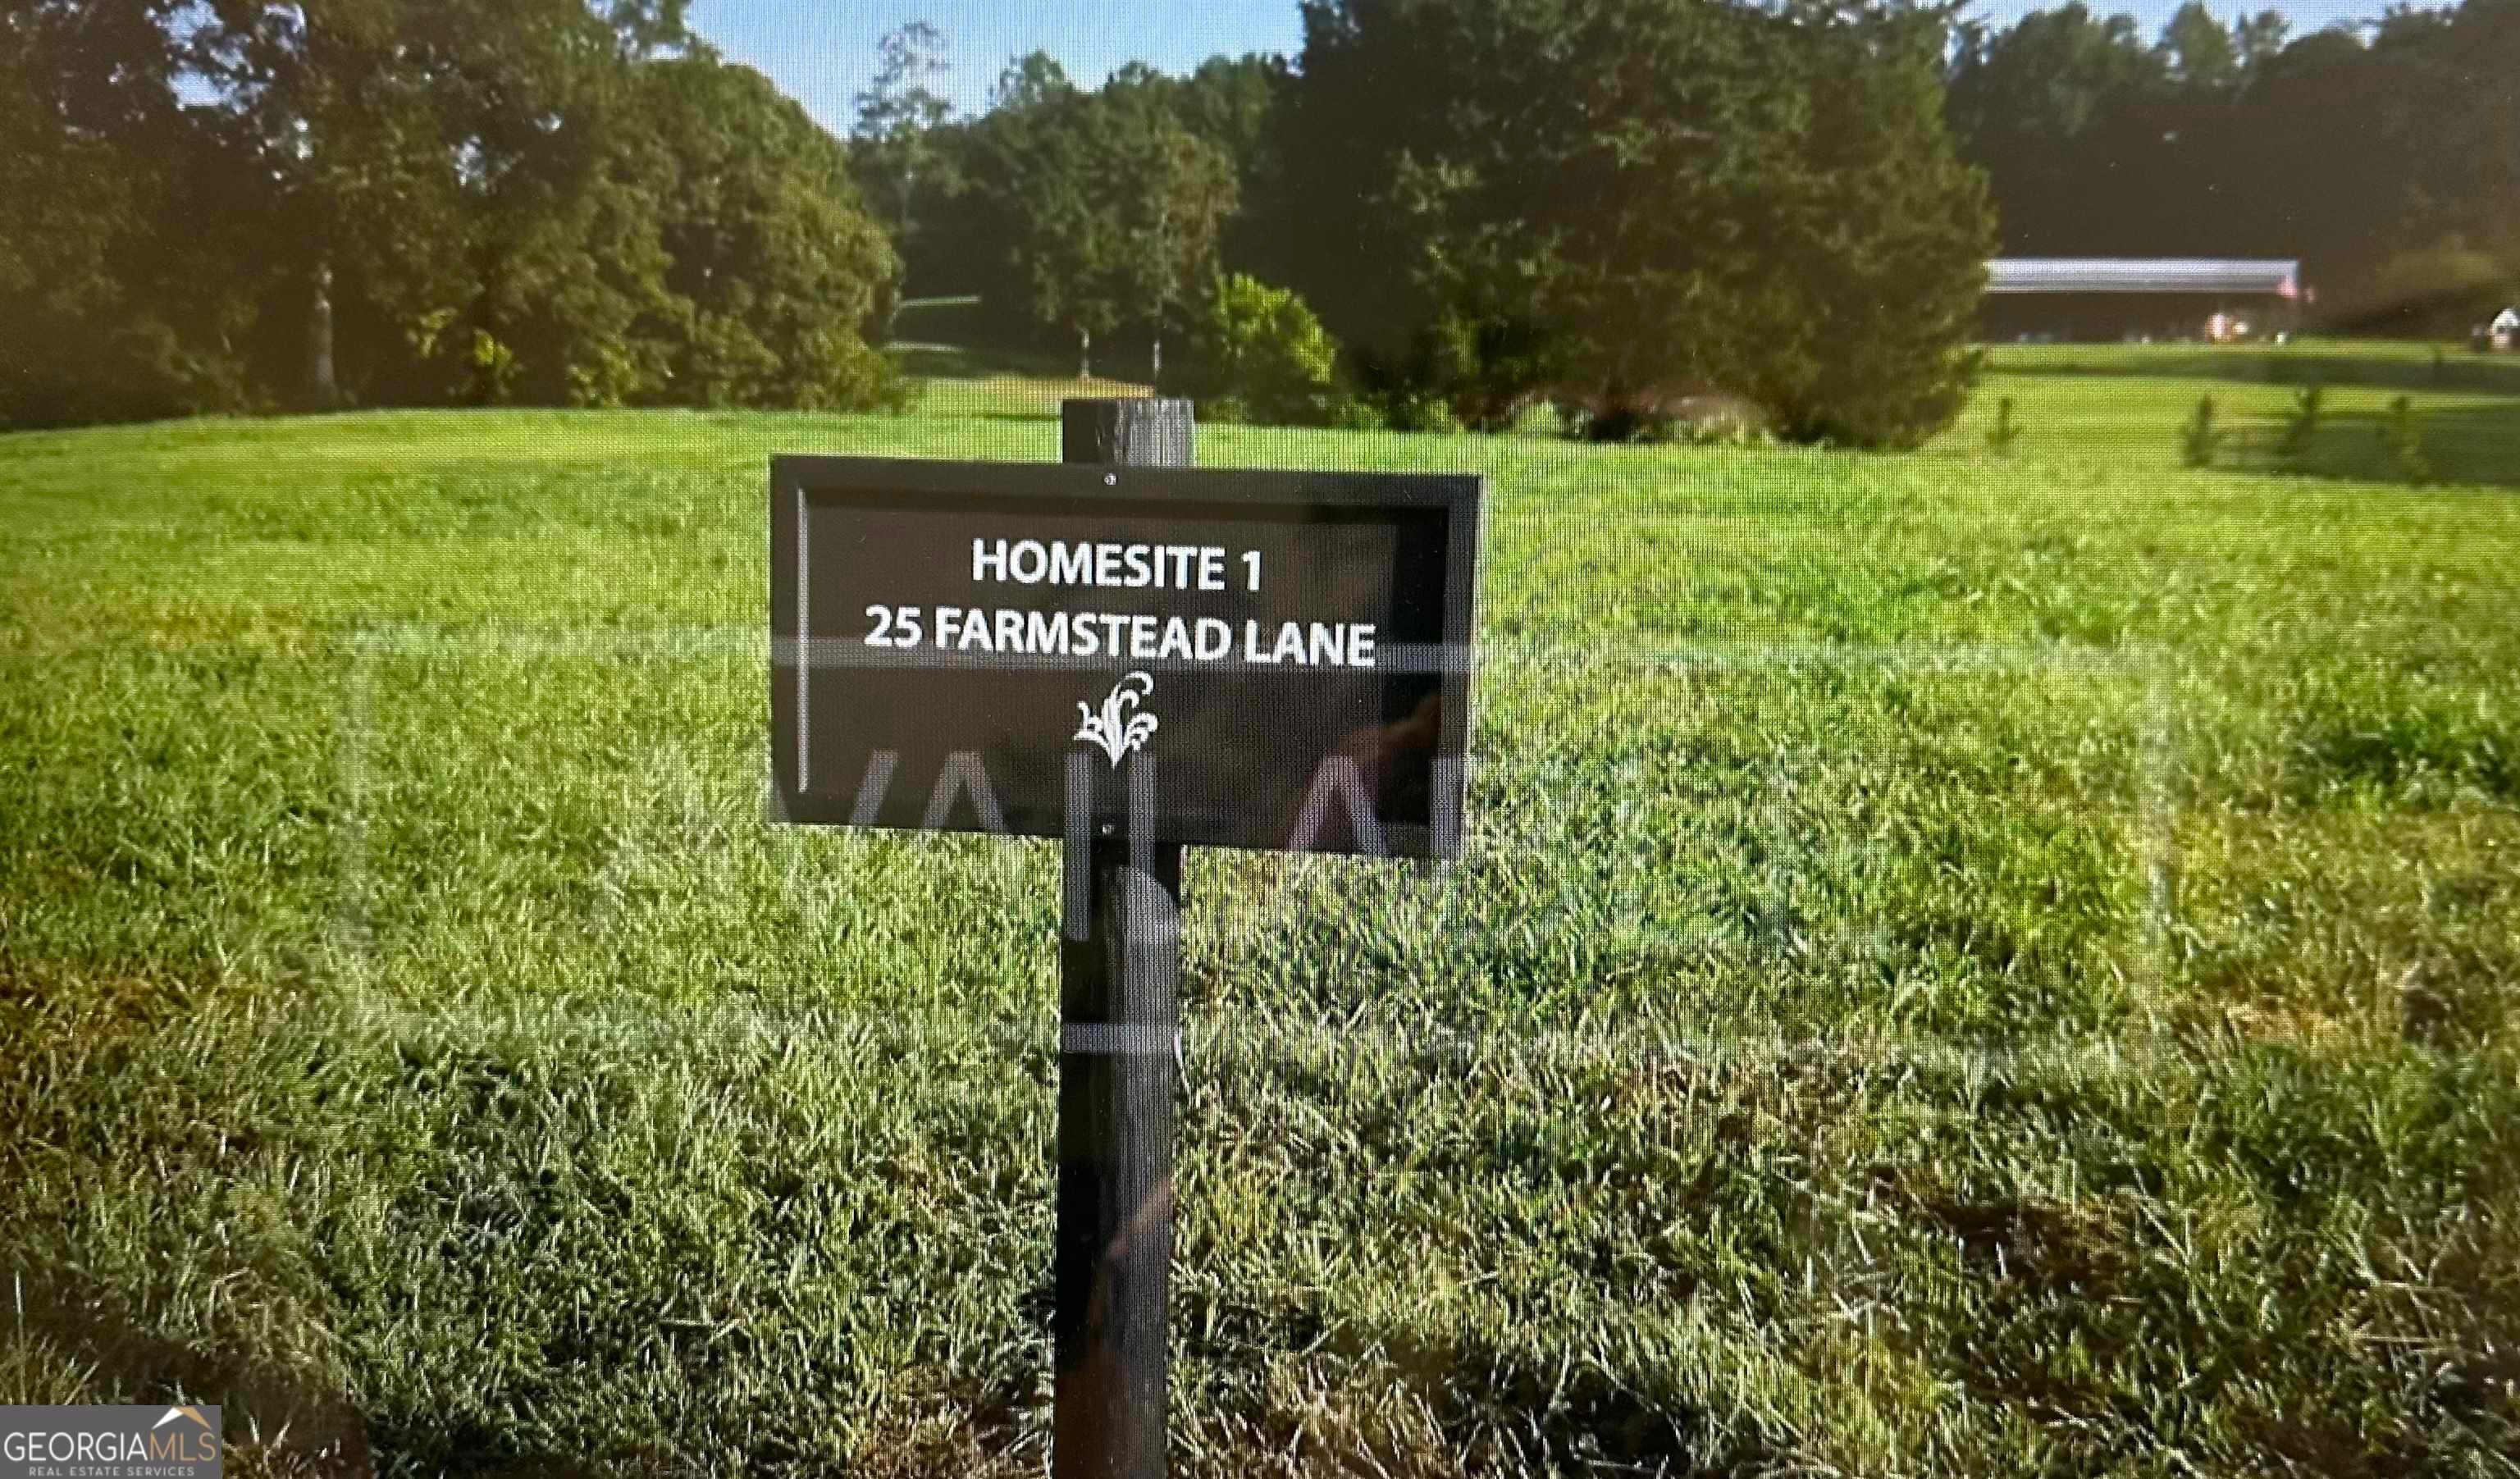 29. 15 Farmstead Lane Homesite 1